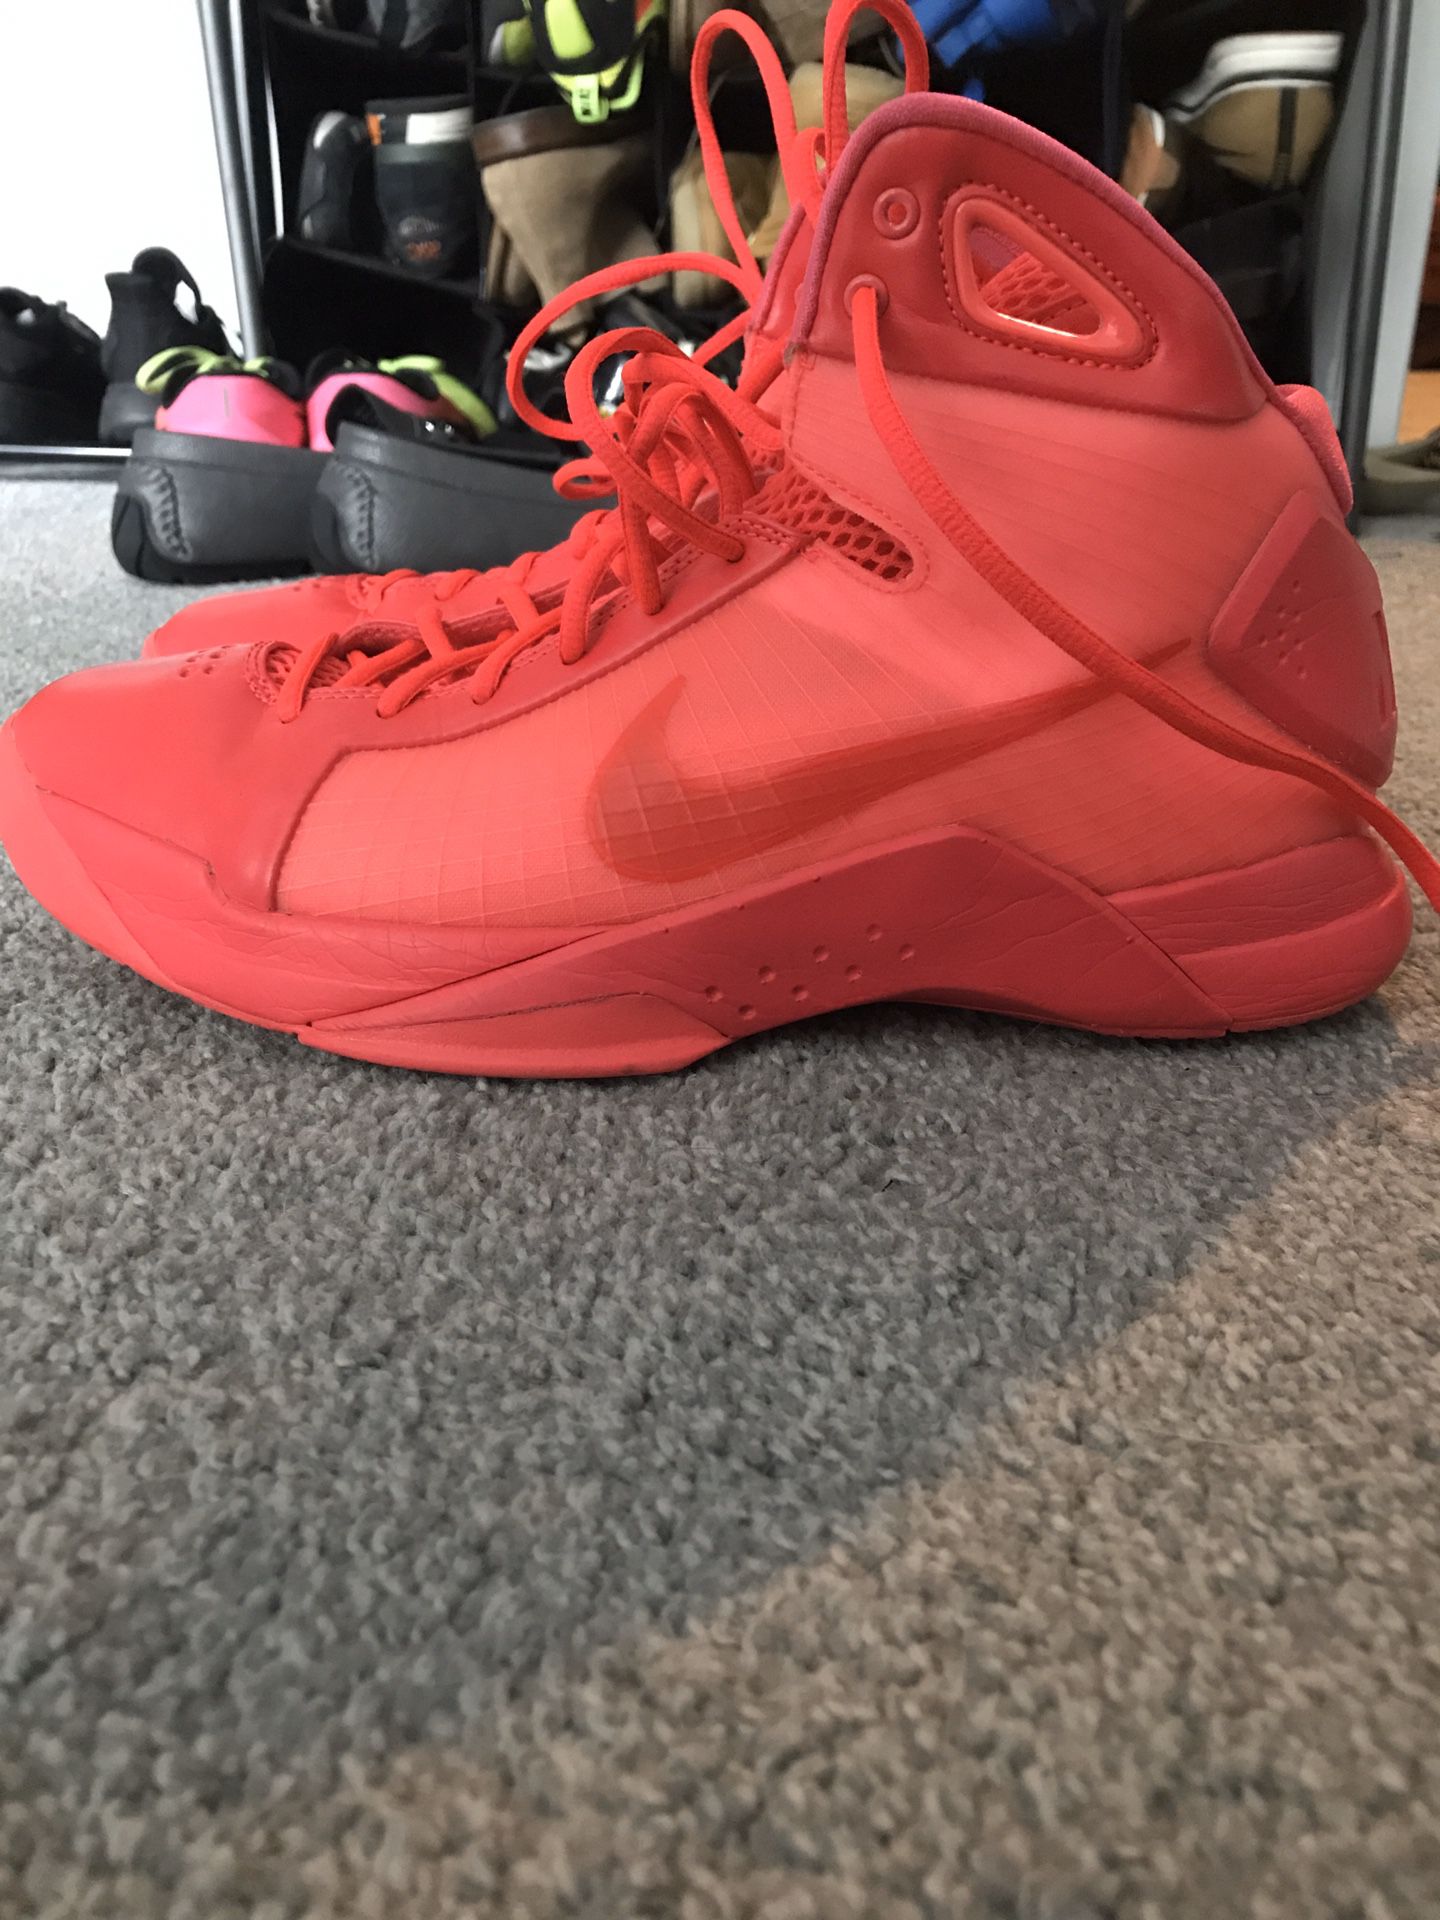 Nike basketball shoes size 10